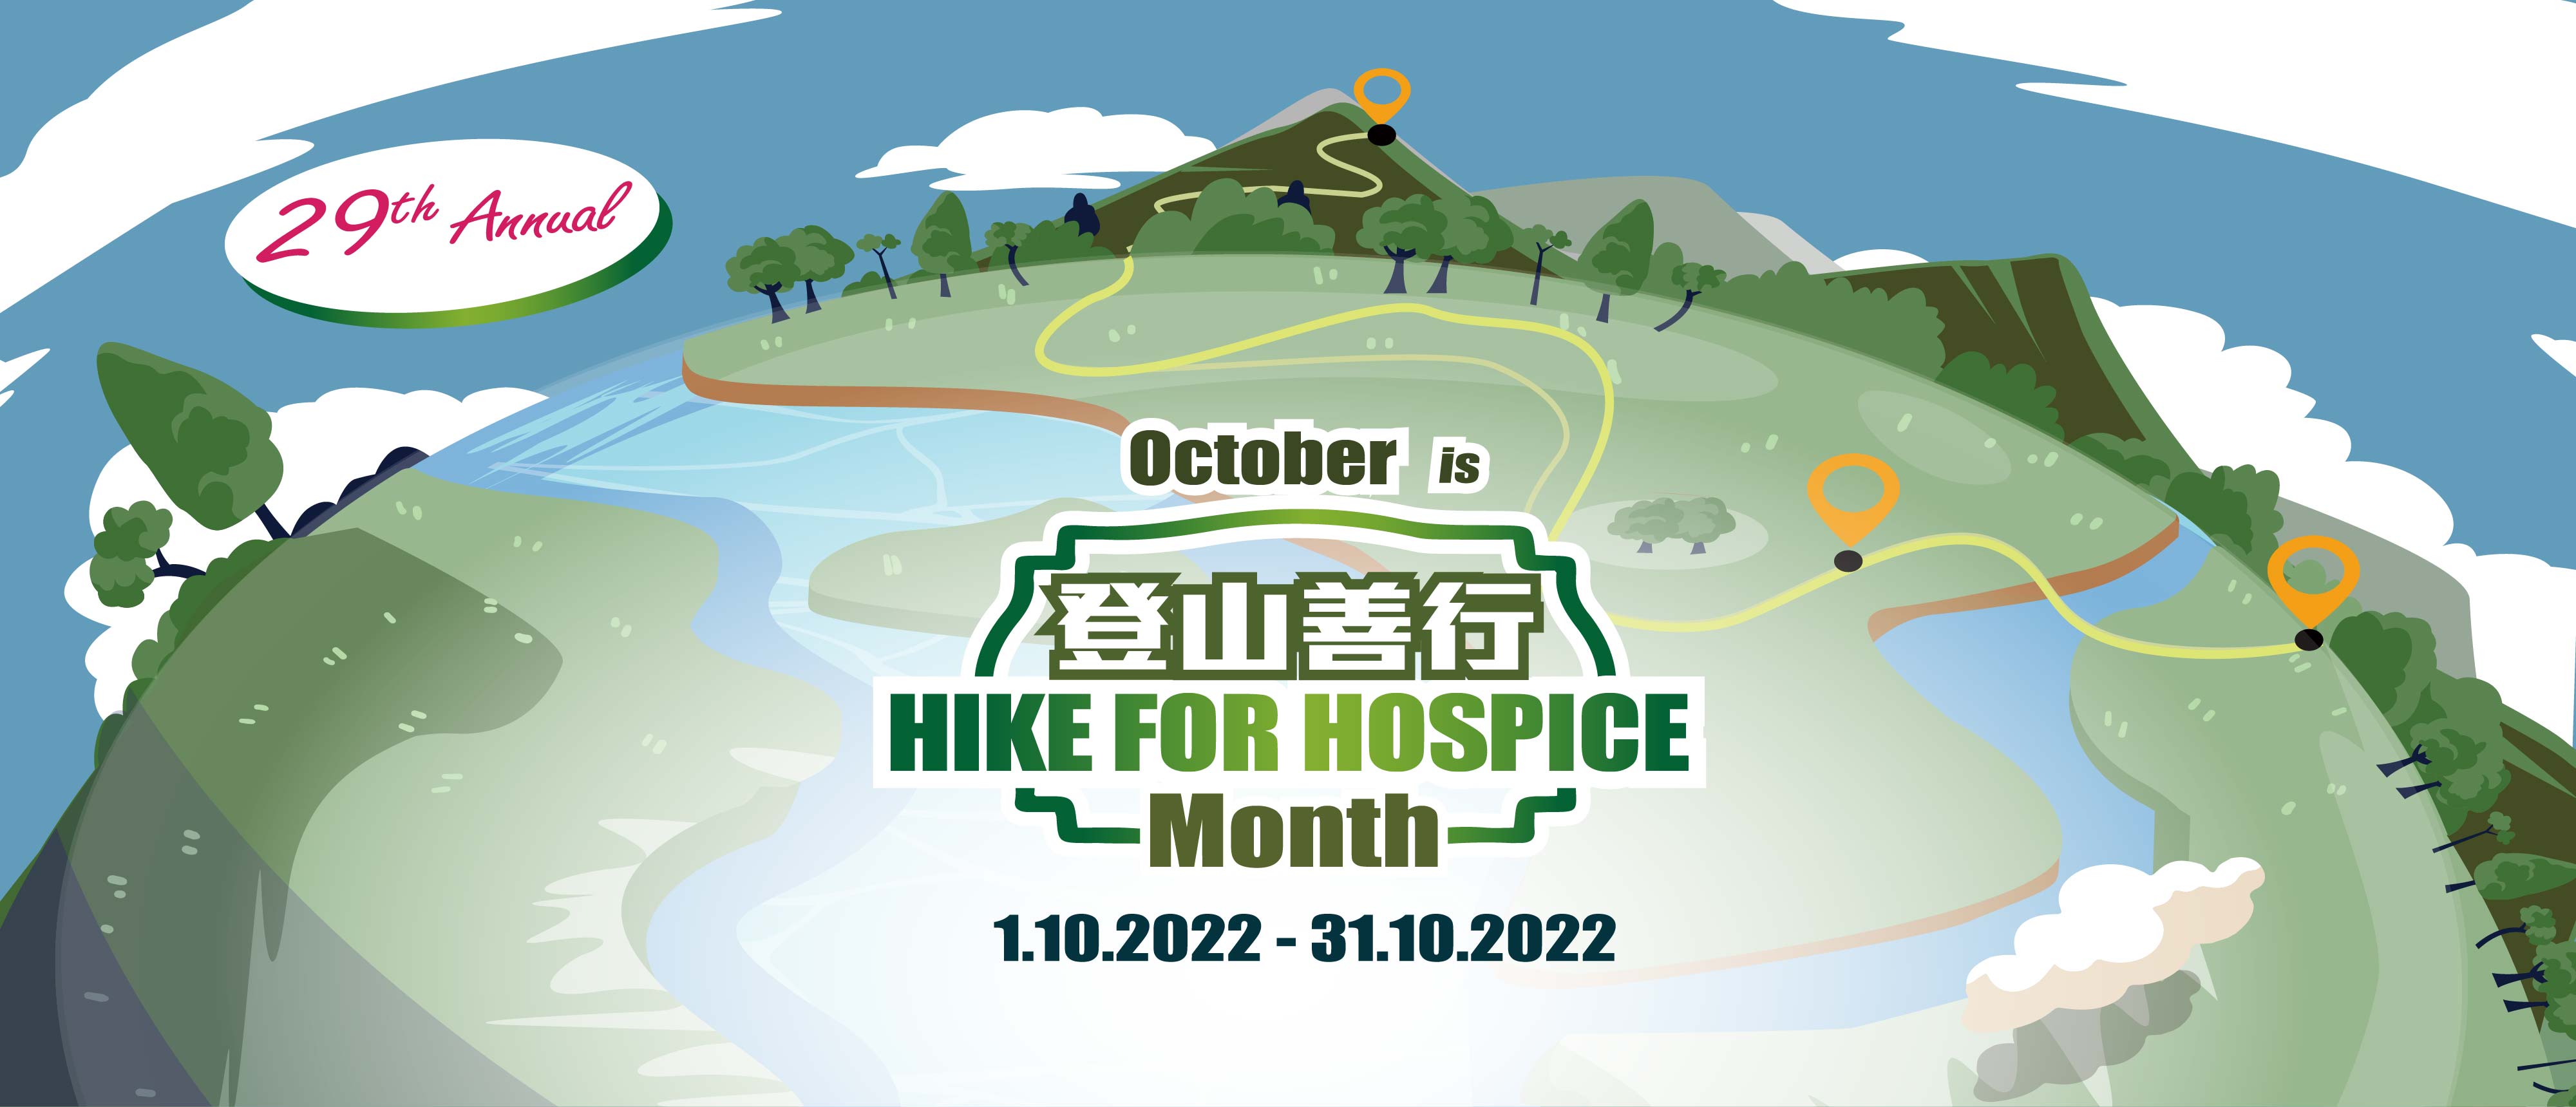 Hike for Hospice 2022 Set for October